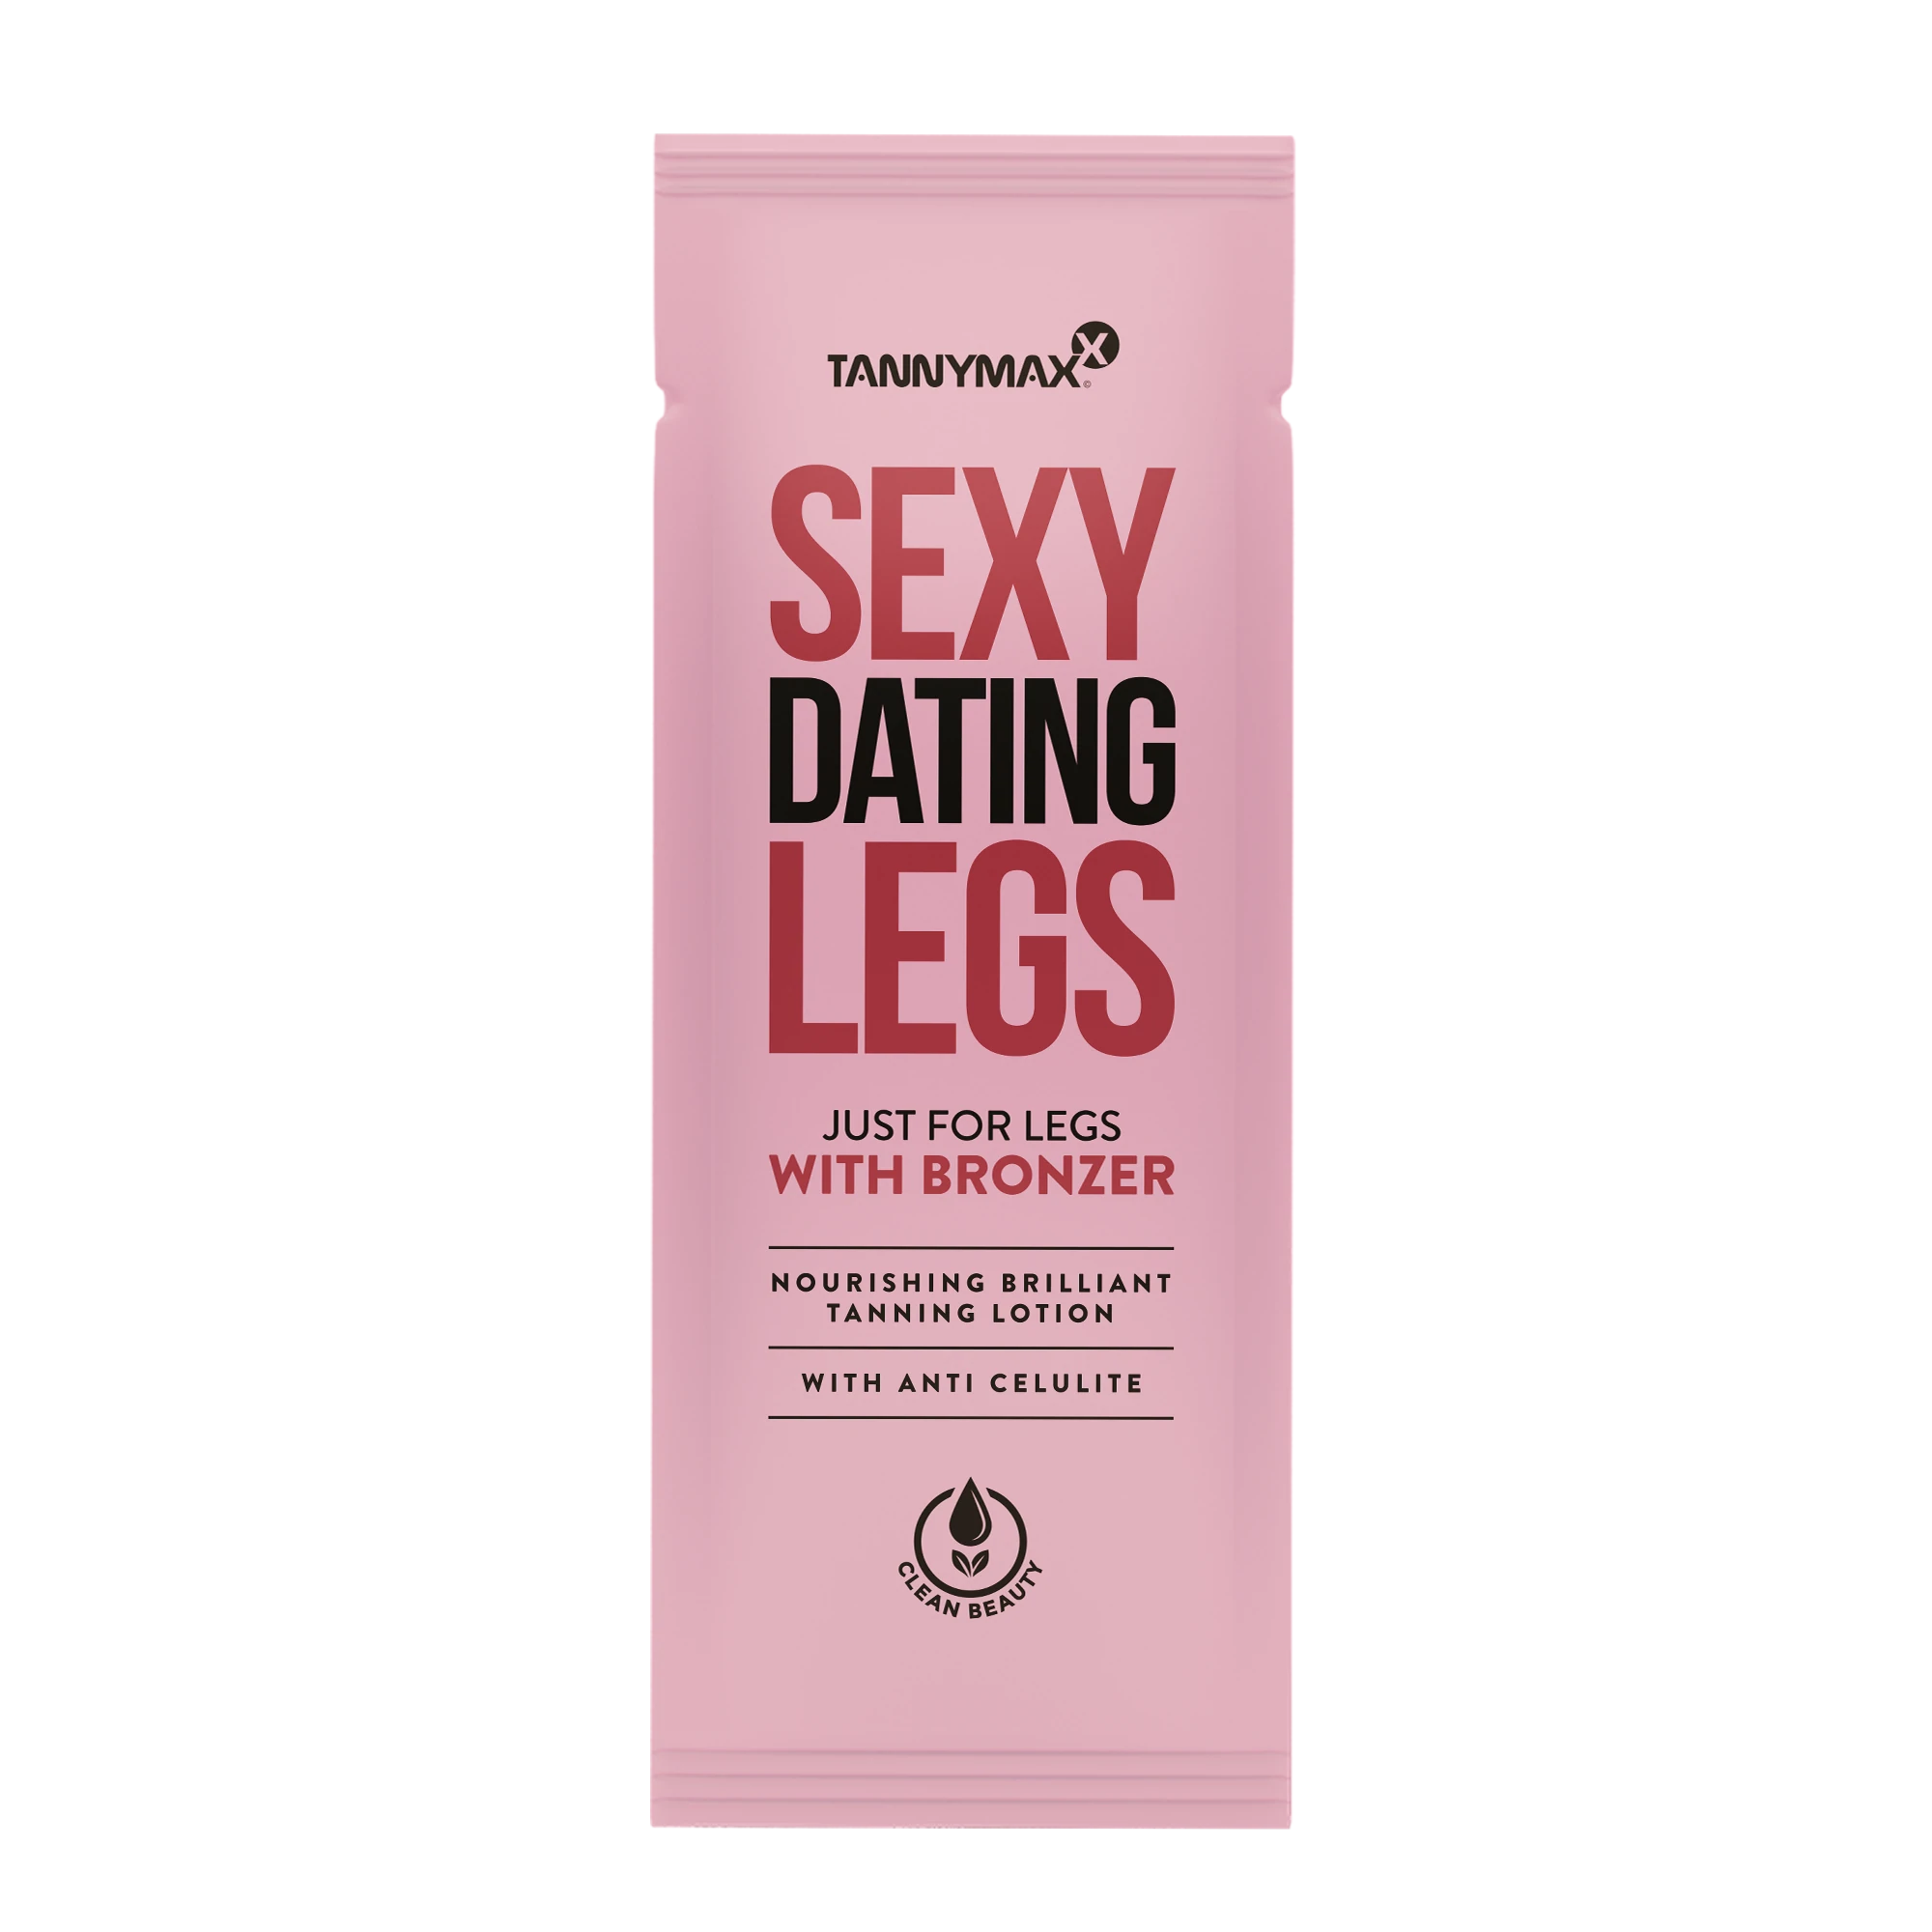 Tannymaxx Sexy Datings Legs Bronzer 